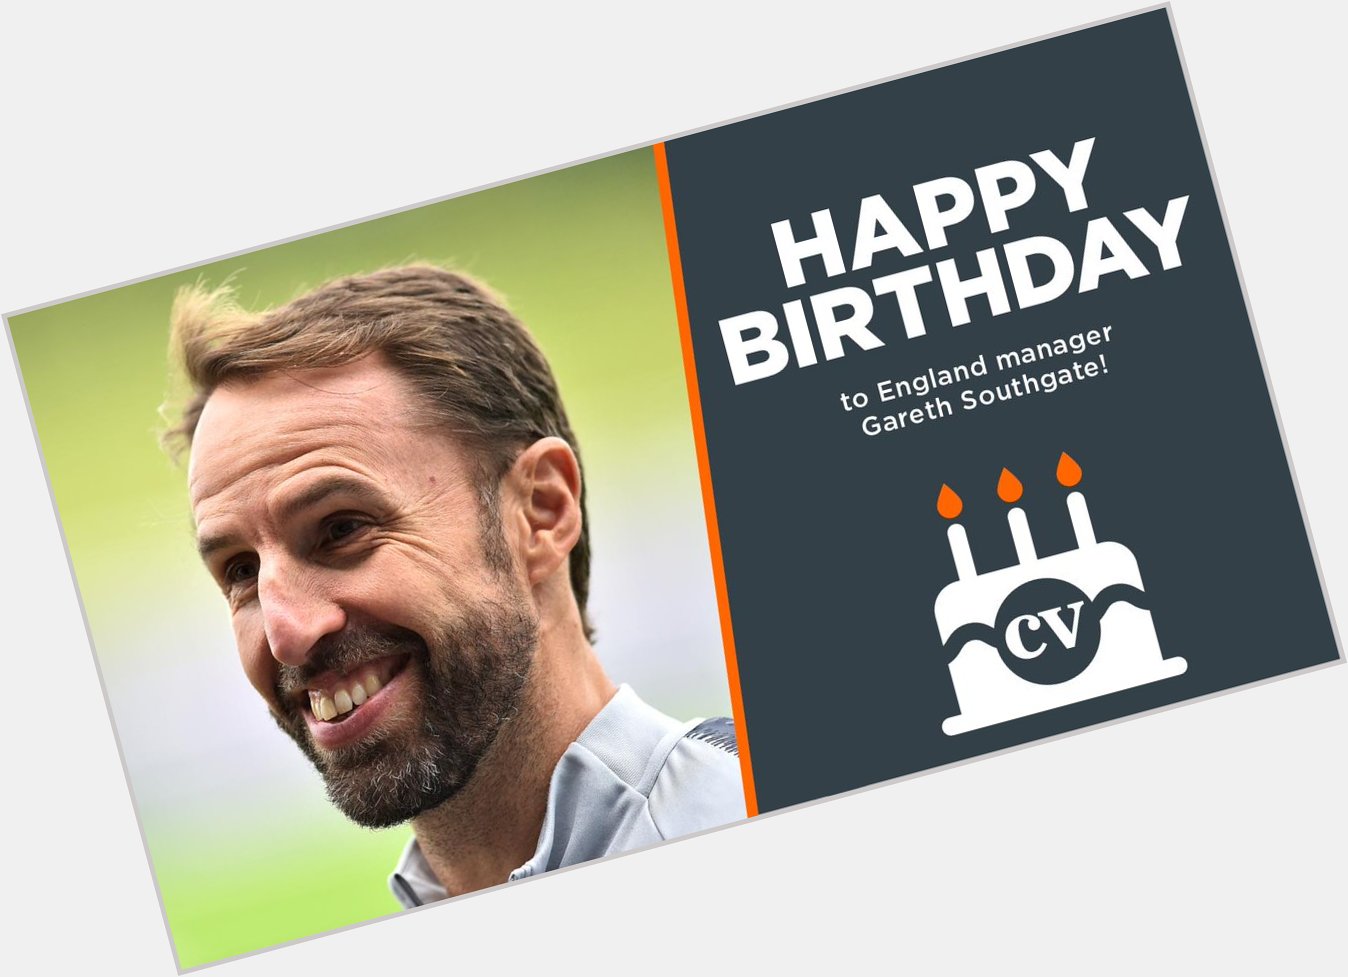  Happy birthday to manager Gareth Southgate!       